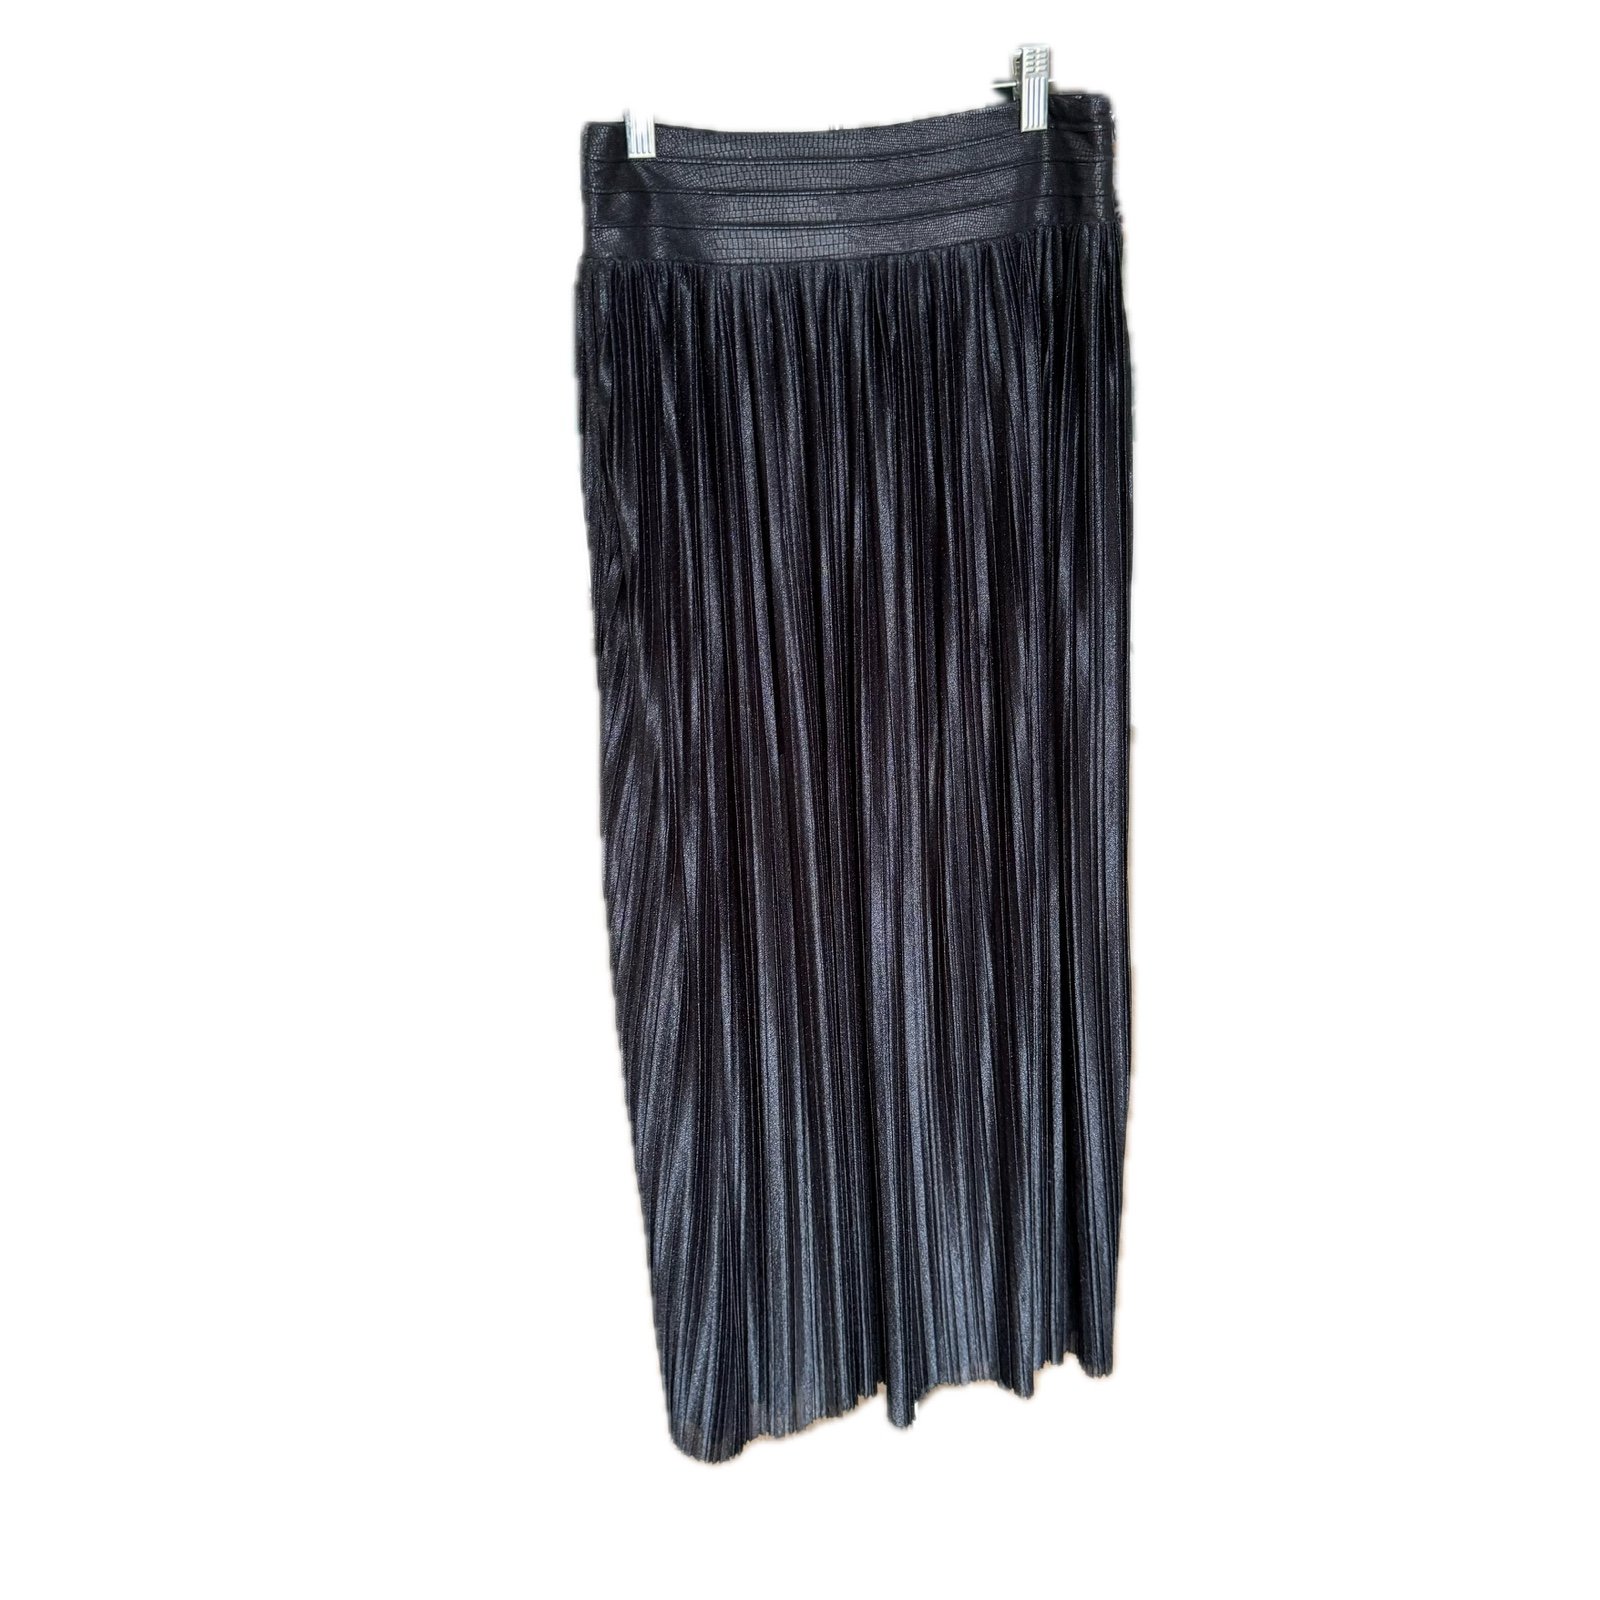 Wholesale price Long Black Skirt lbCAMG0Ta New Style